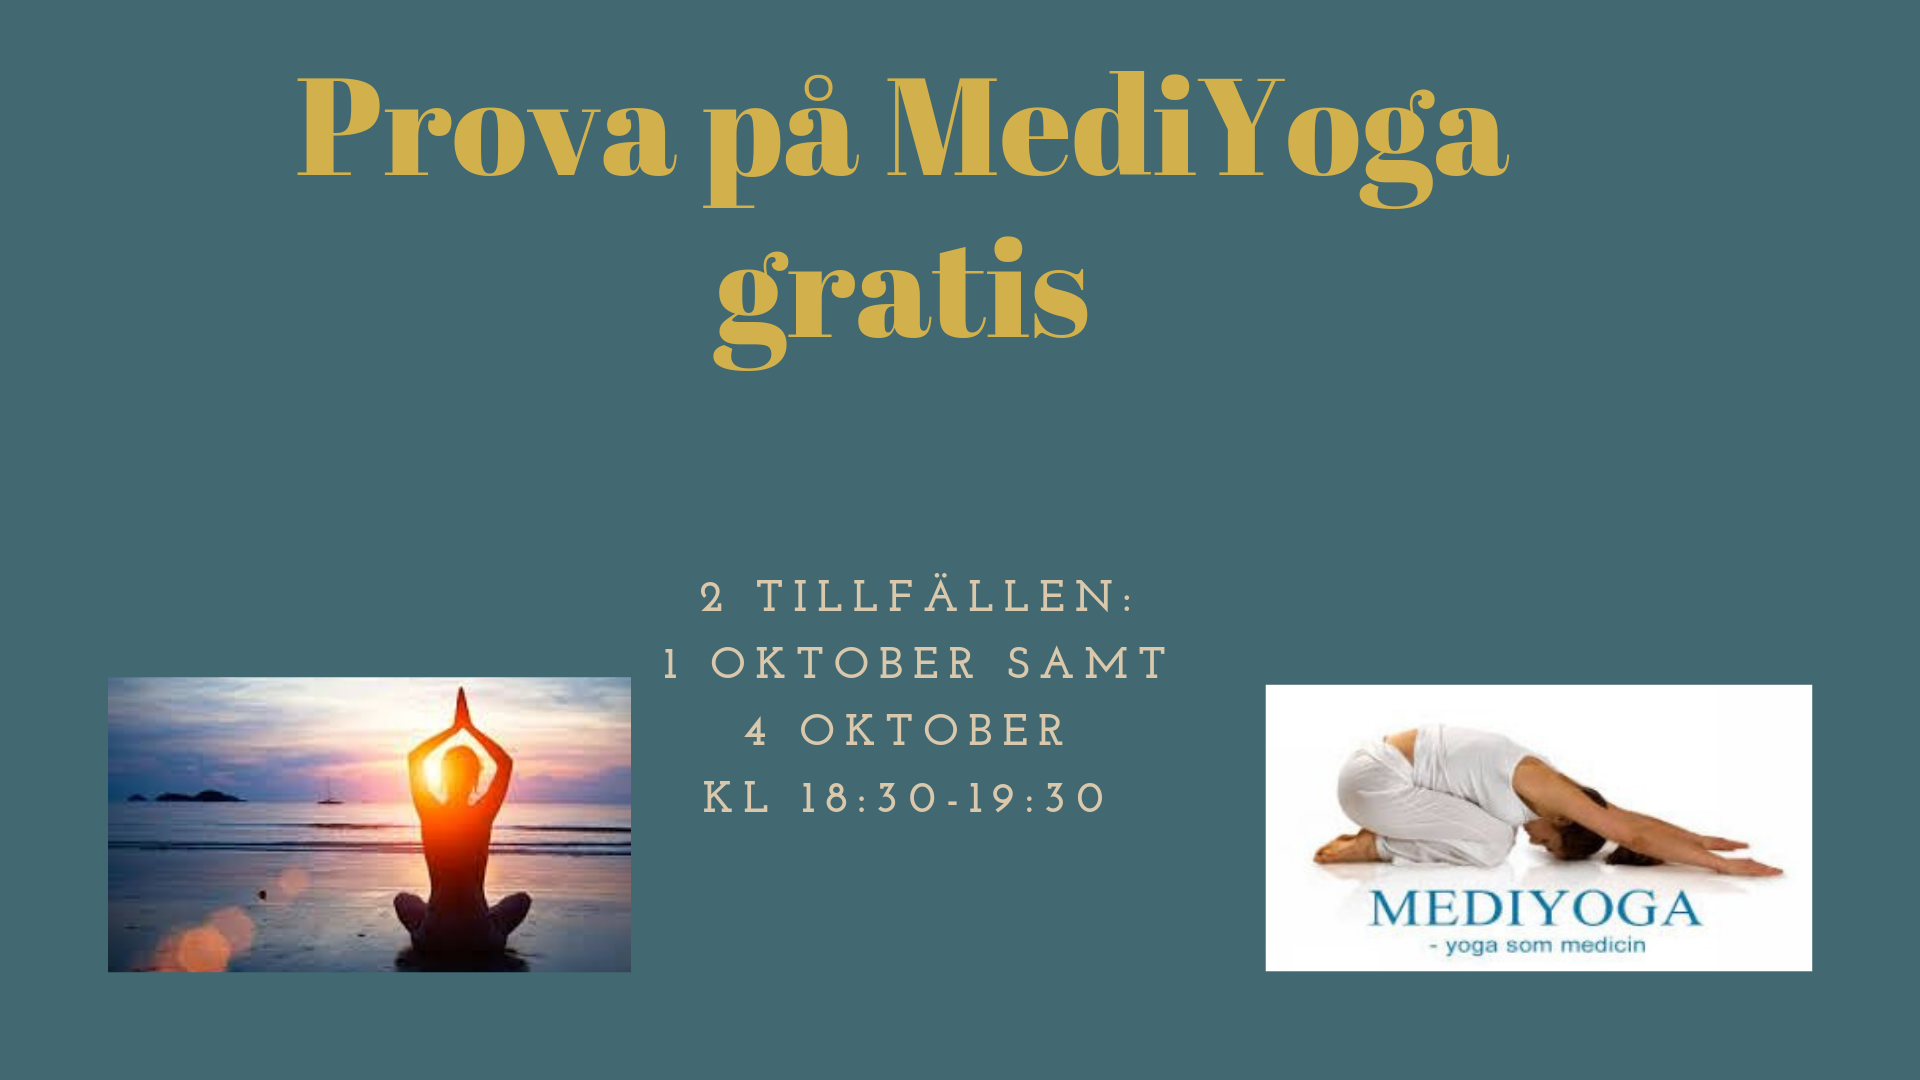 Prova på Mediyoga gratis 4 oktober